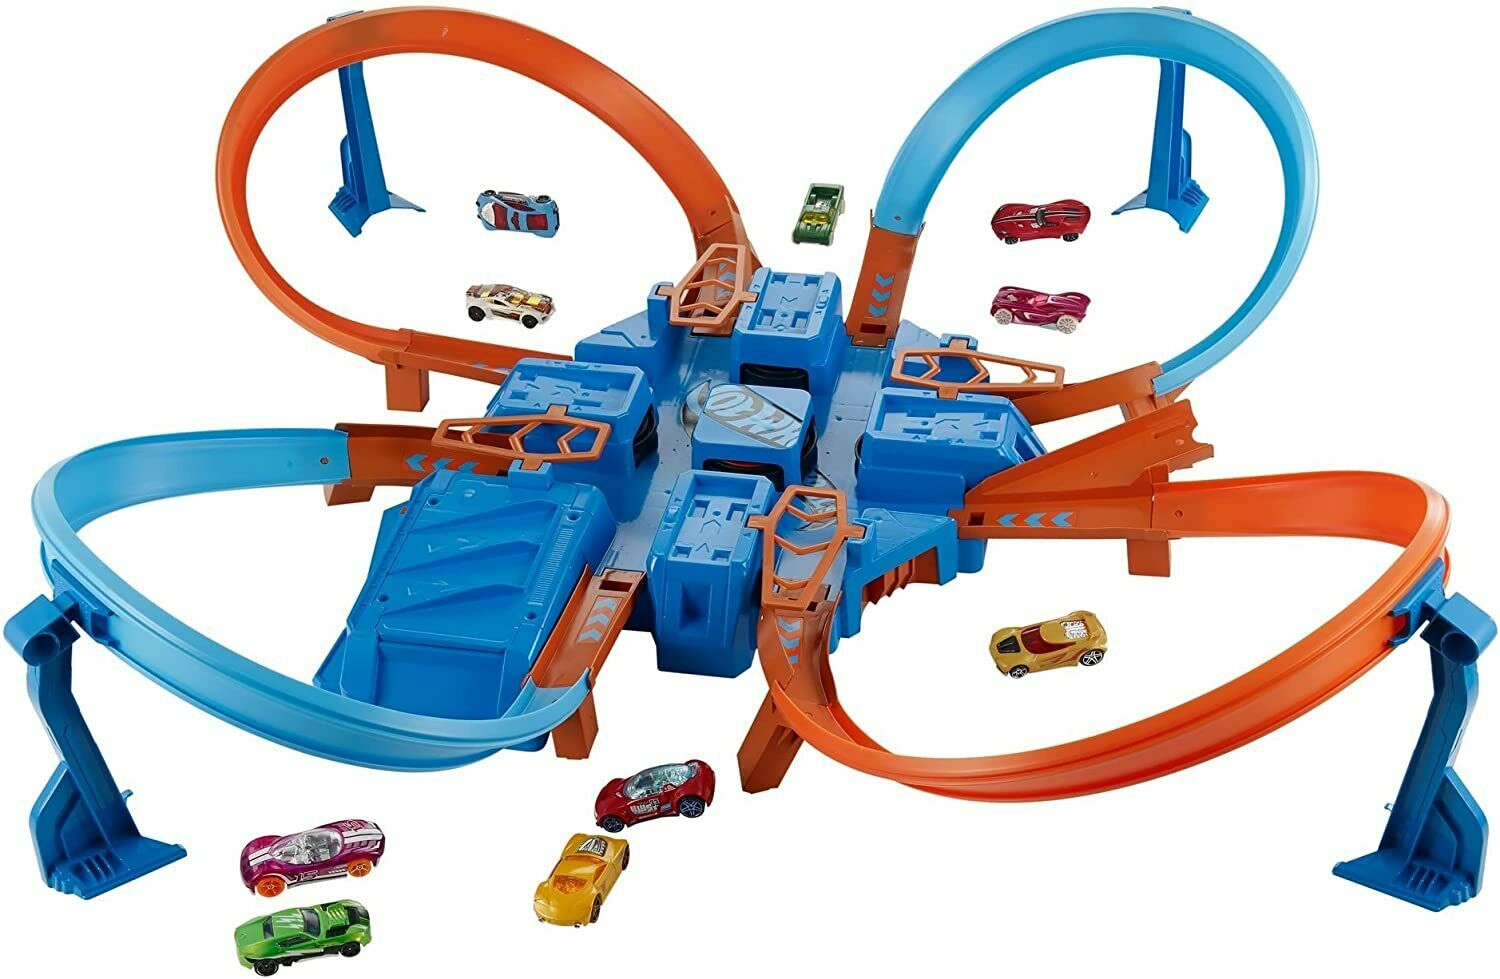 Hot Wheels Criss Cross Crash Track Set Toy Vehicles Accessories Racing - New